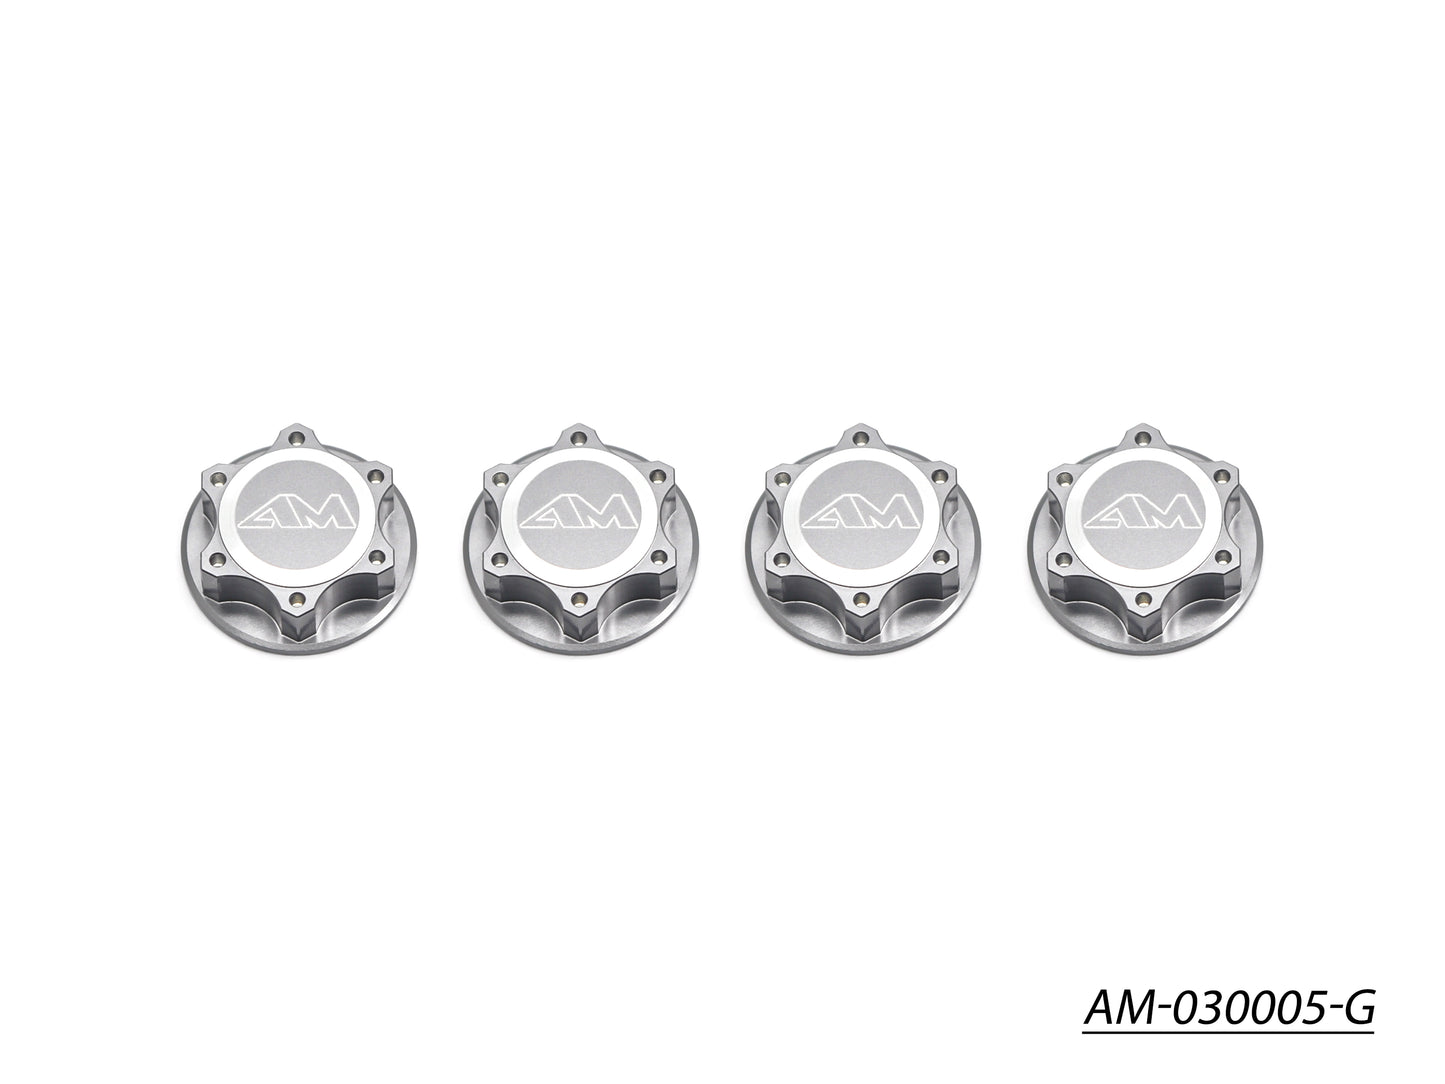 Alu 1/8Th Wheel Nuts Closed End / Lightweight (Gray) (4) (AM-030005-G)